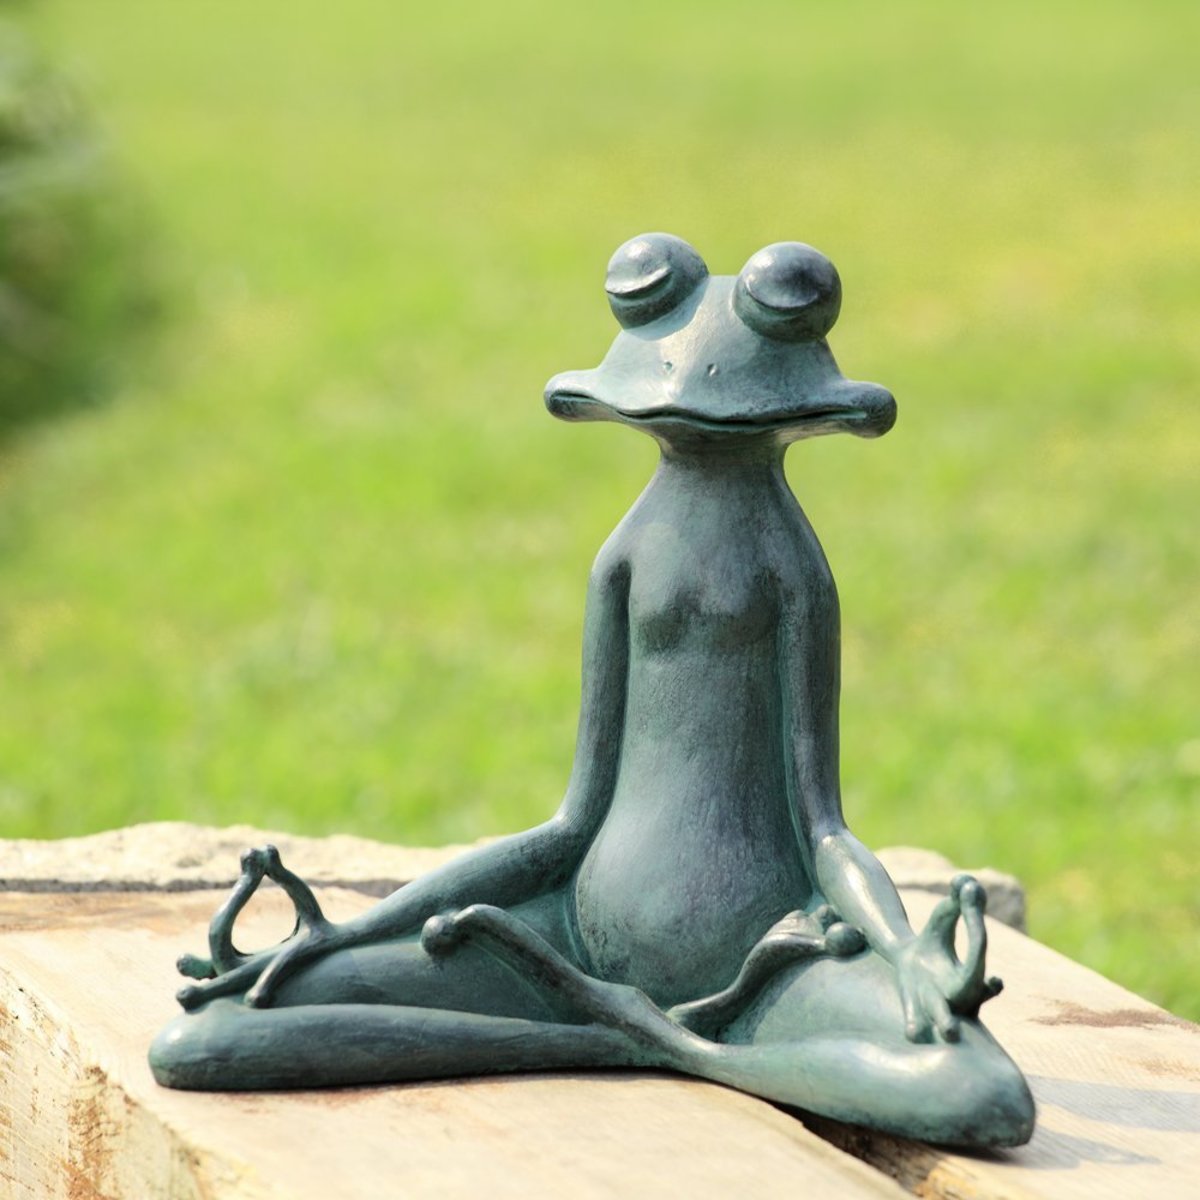 Yoga Frog in meditation